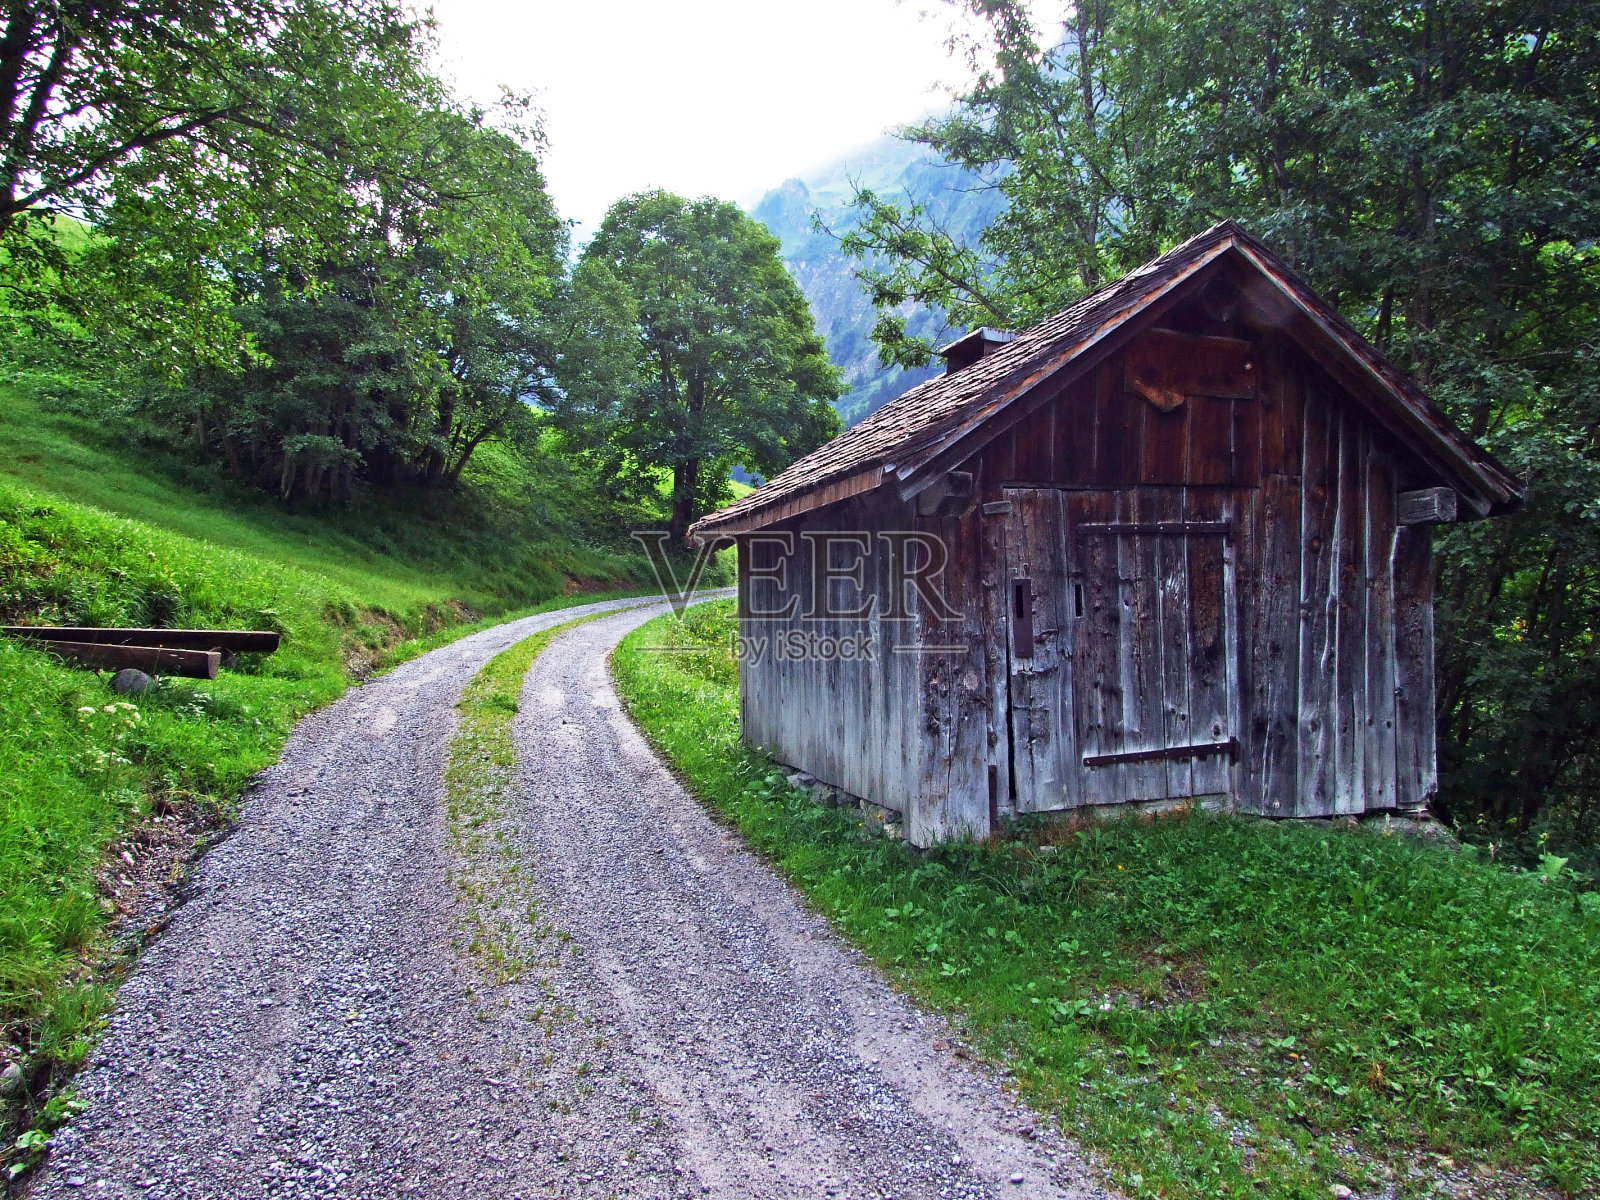 Sernftal高山山谷的乡村传统建筑和牲畜农场照片摄影图片